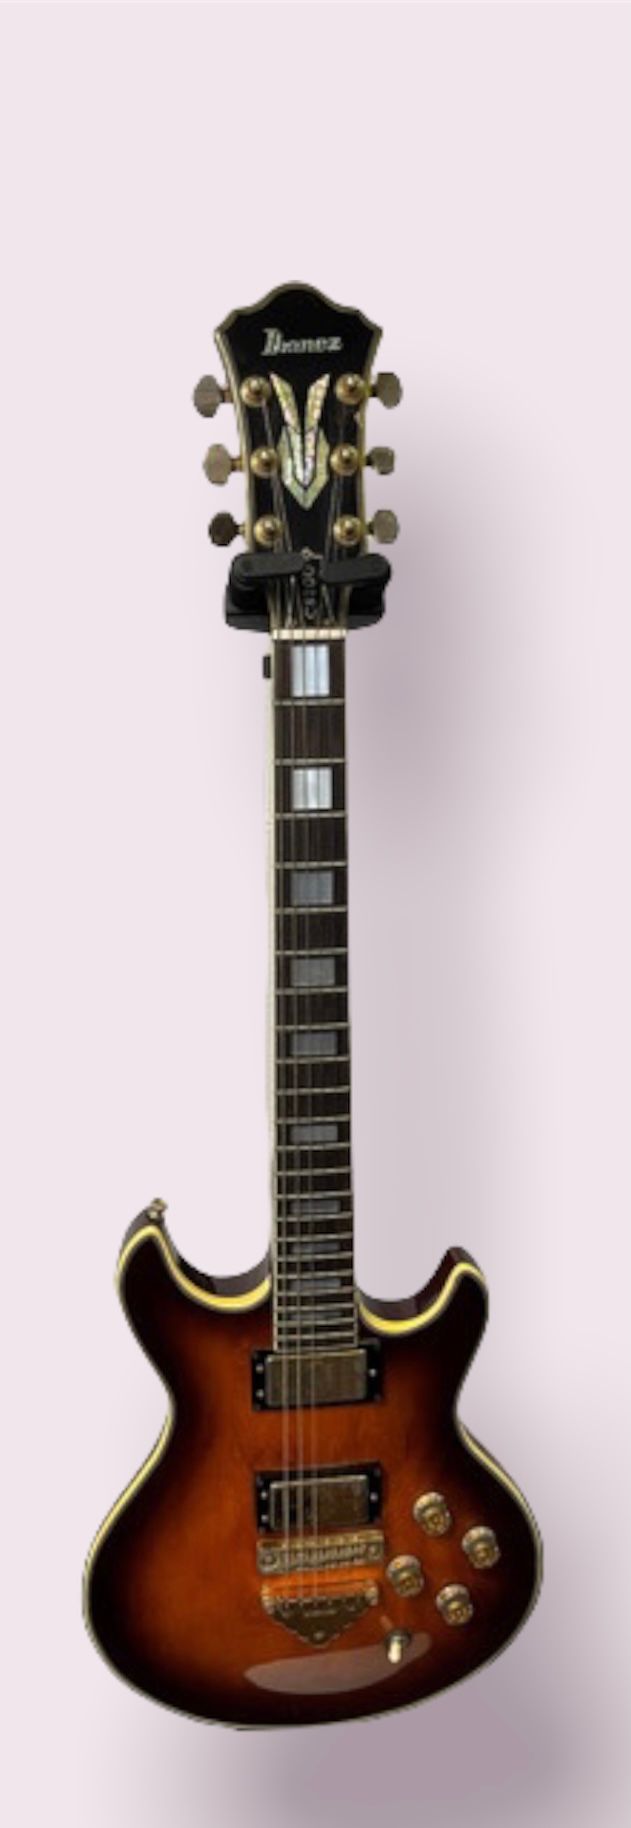 Null 电吉他，伊巴内兹CN 200

旭日东升，编号D780948

(有磨损的痕迹，琴头有小的镀层缺失，拾音器有磨损)

有一个黑色的封面